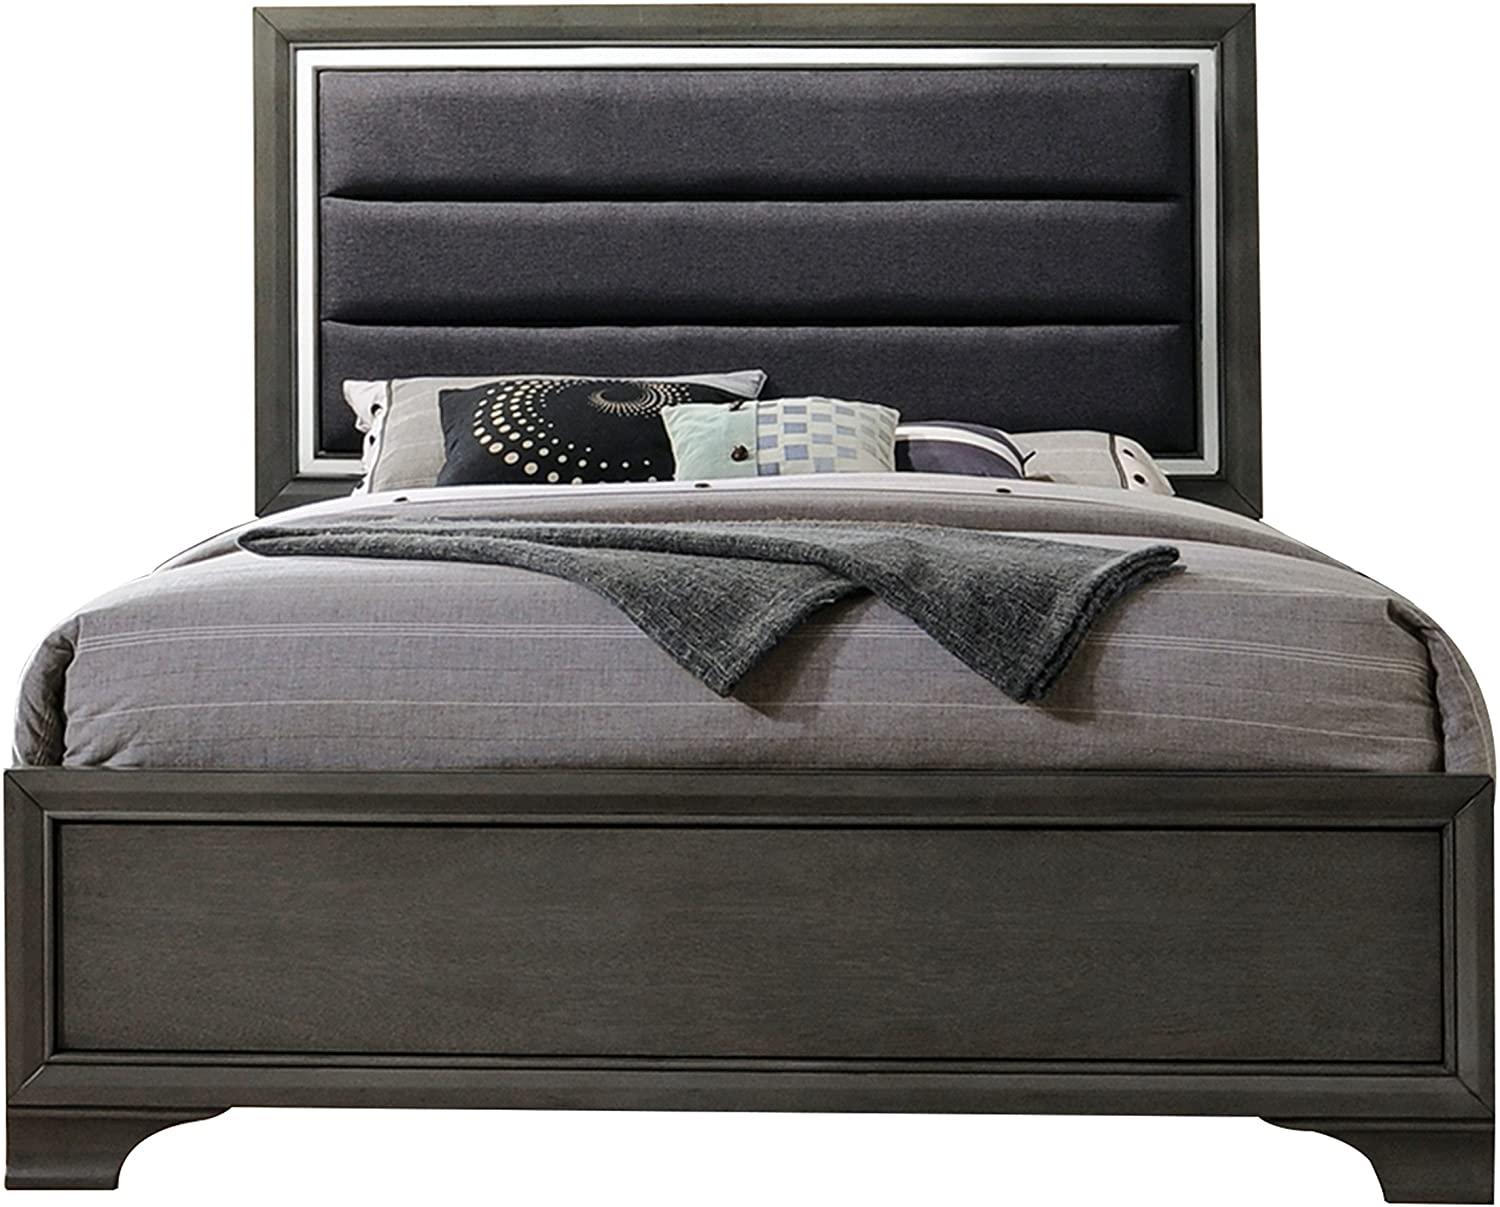 

    
Transitional Charcoal/Gray Finish Fabric Queen Bedroom Set 3Pcs Carine II-26260Q Acme
